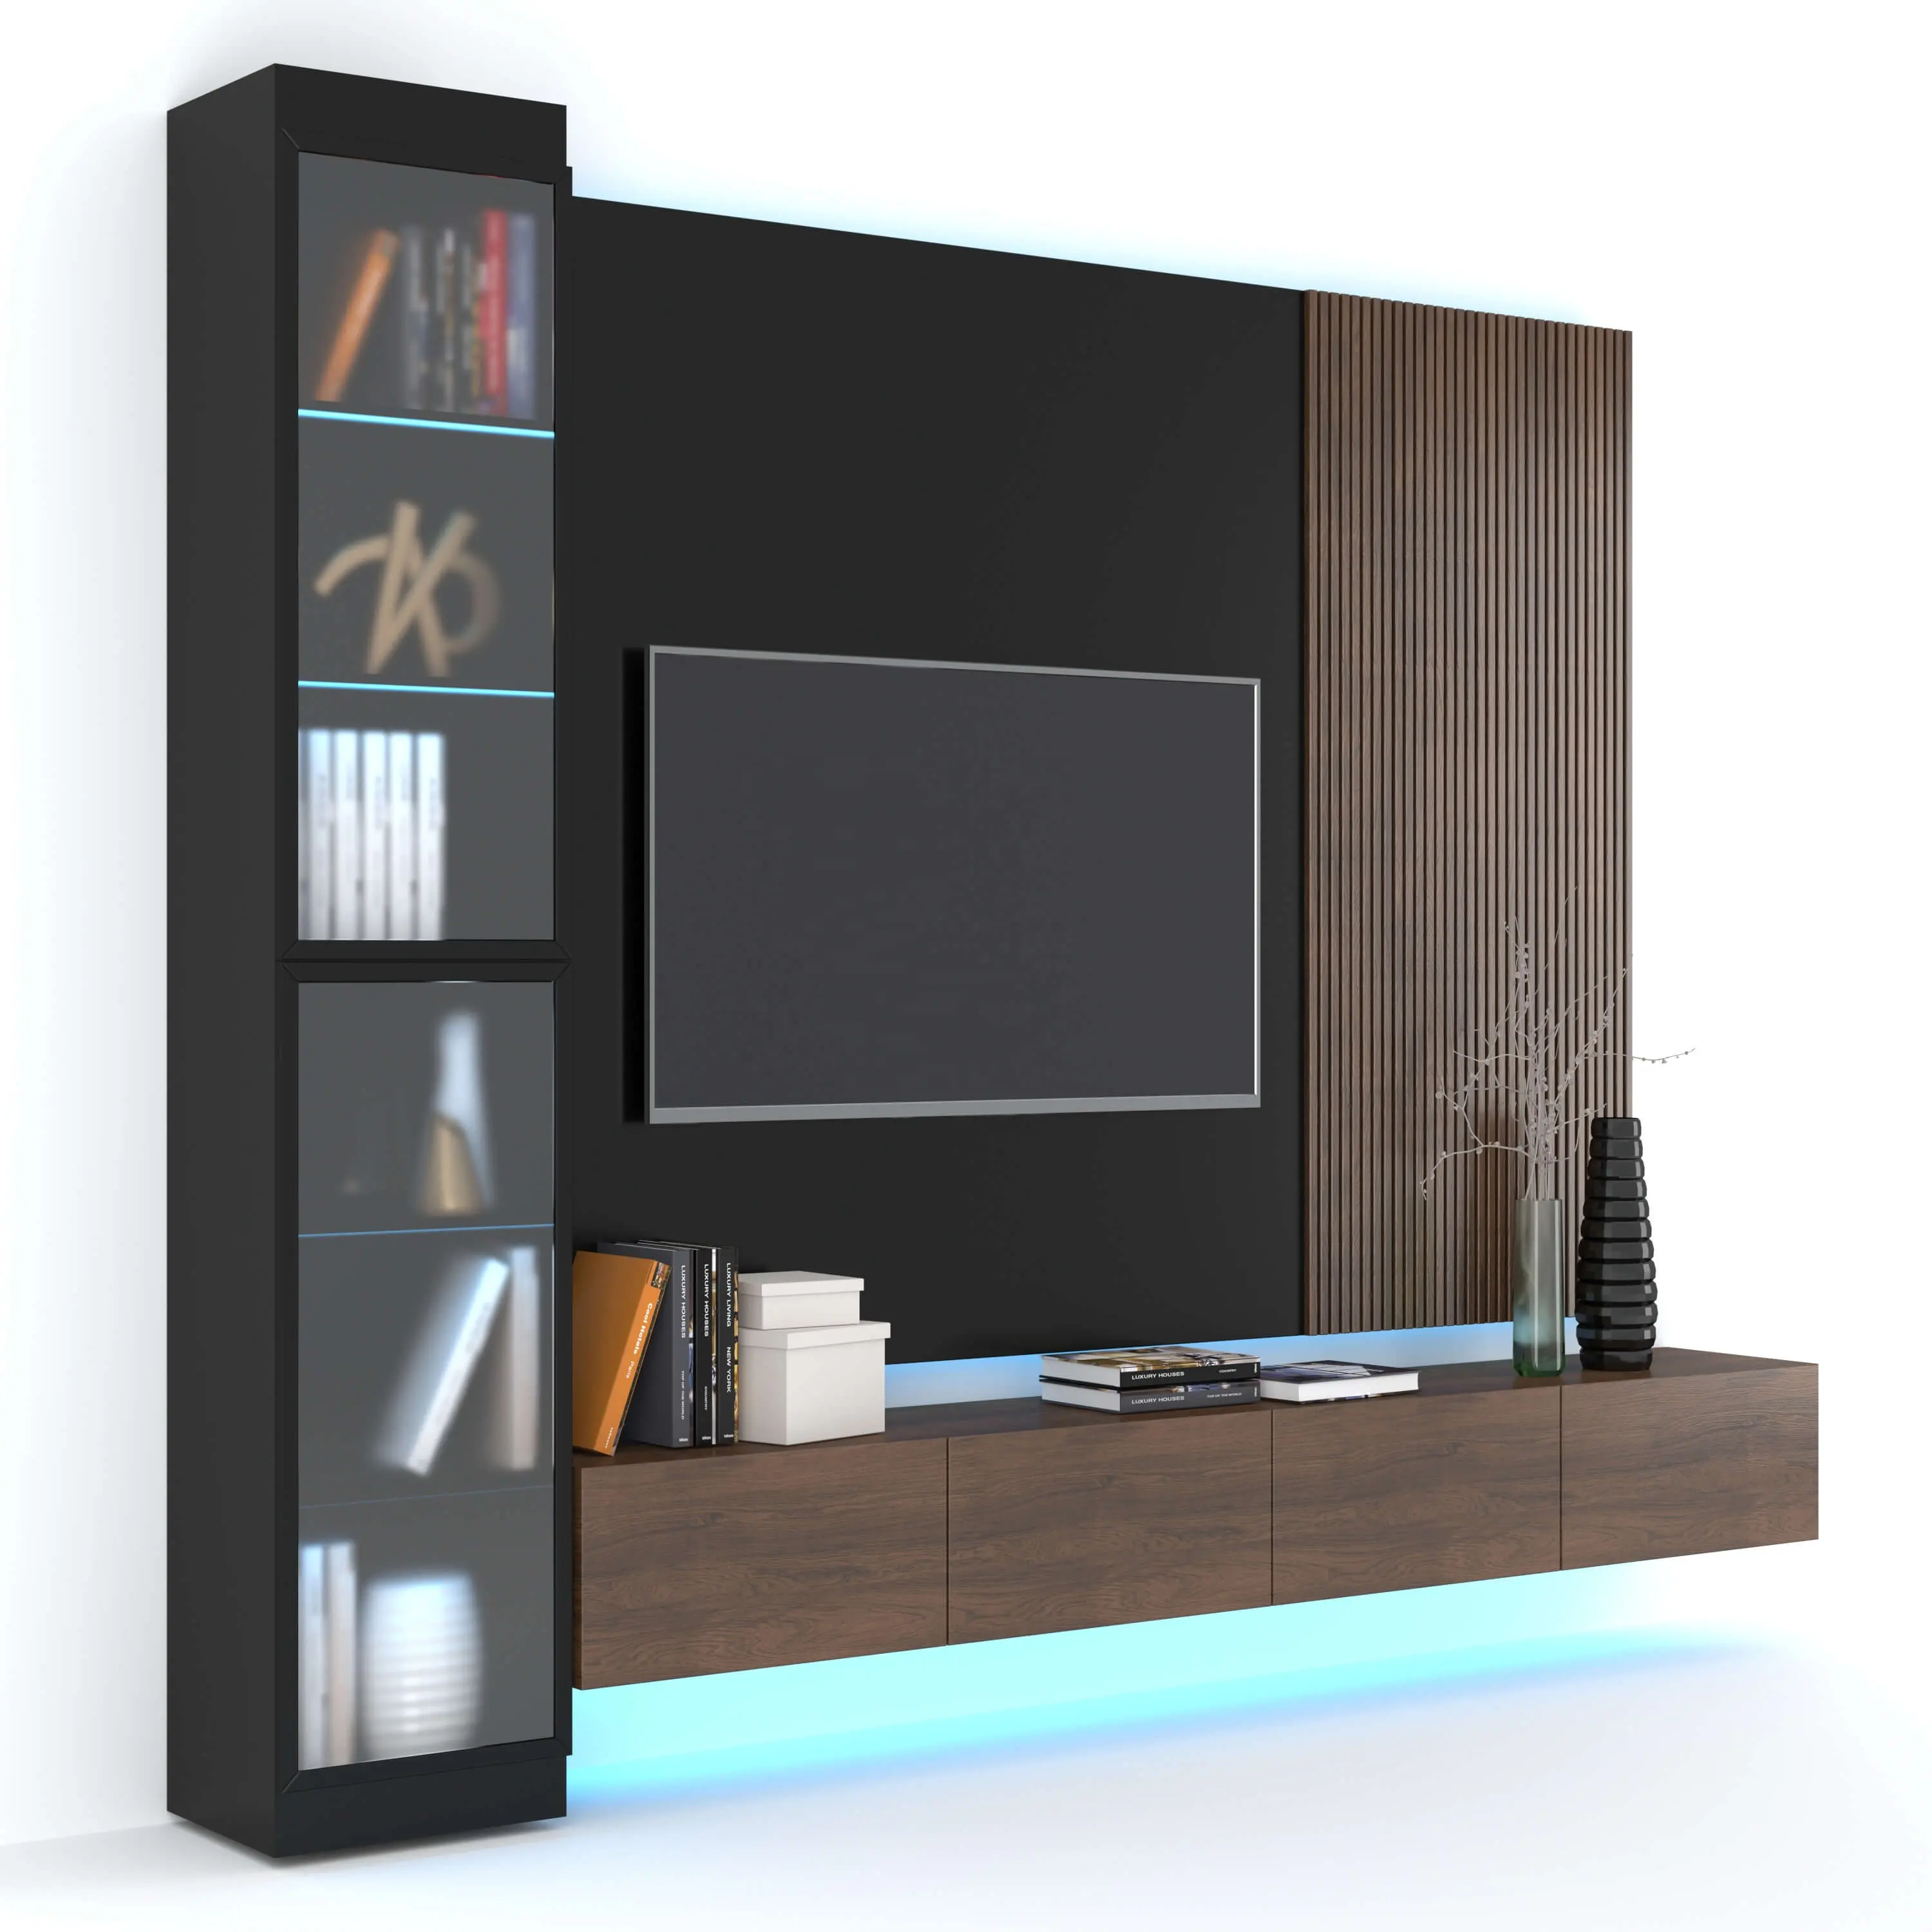 PA modern living room furniture camino tv table black led light design tv stand armadi